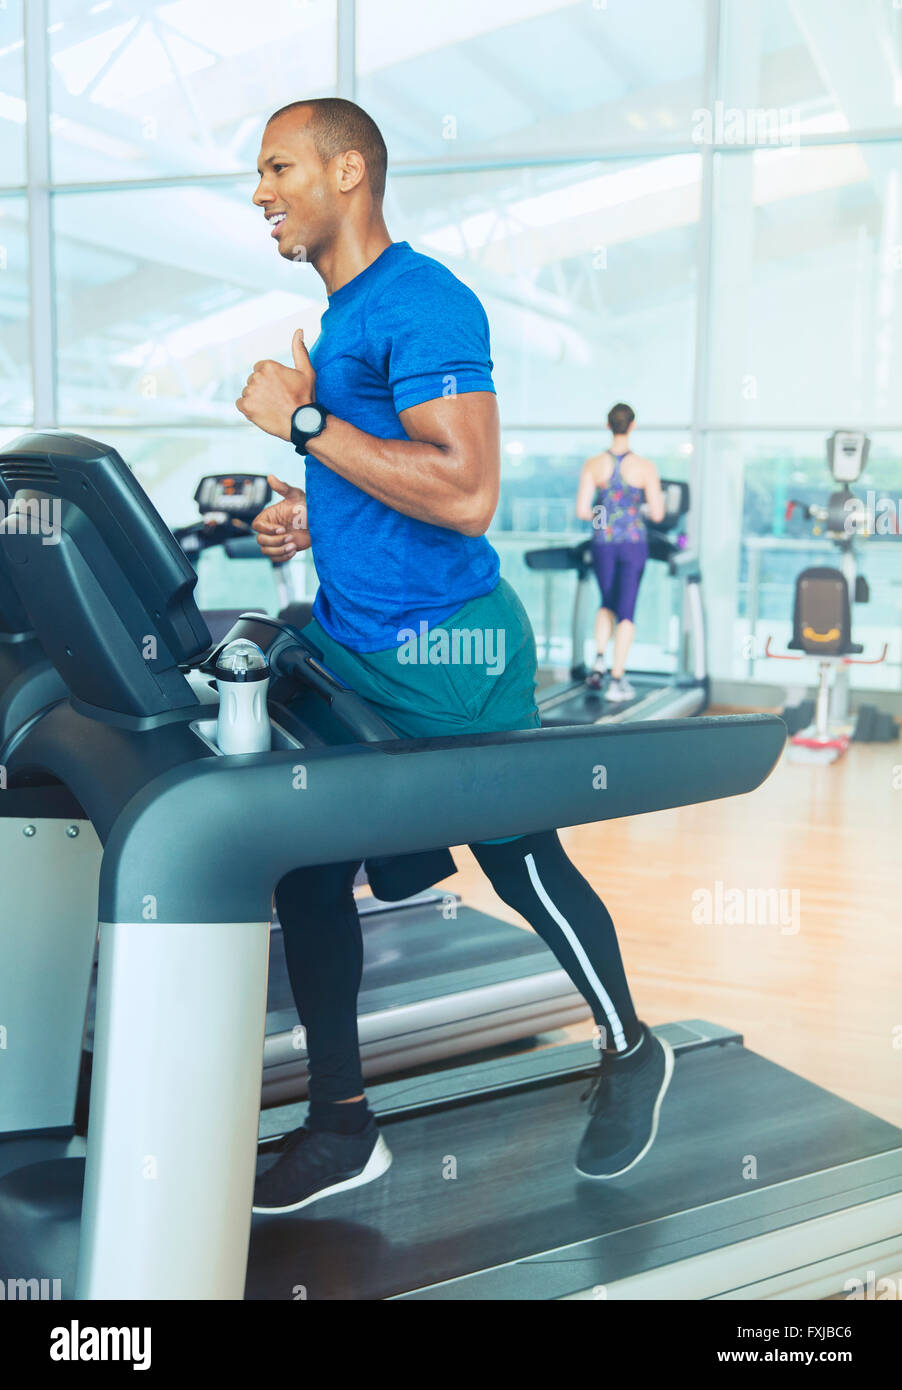 Man running on treadmill at gym Stock Photo